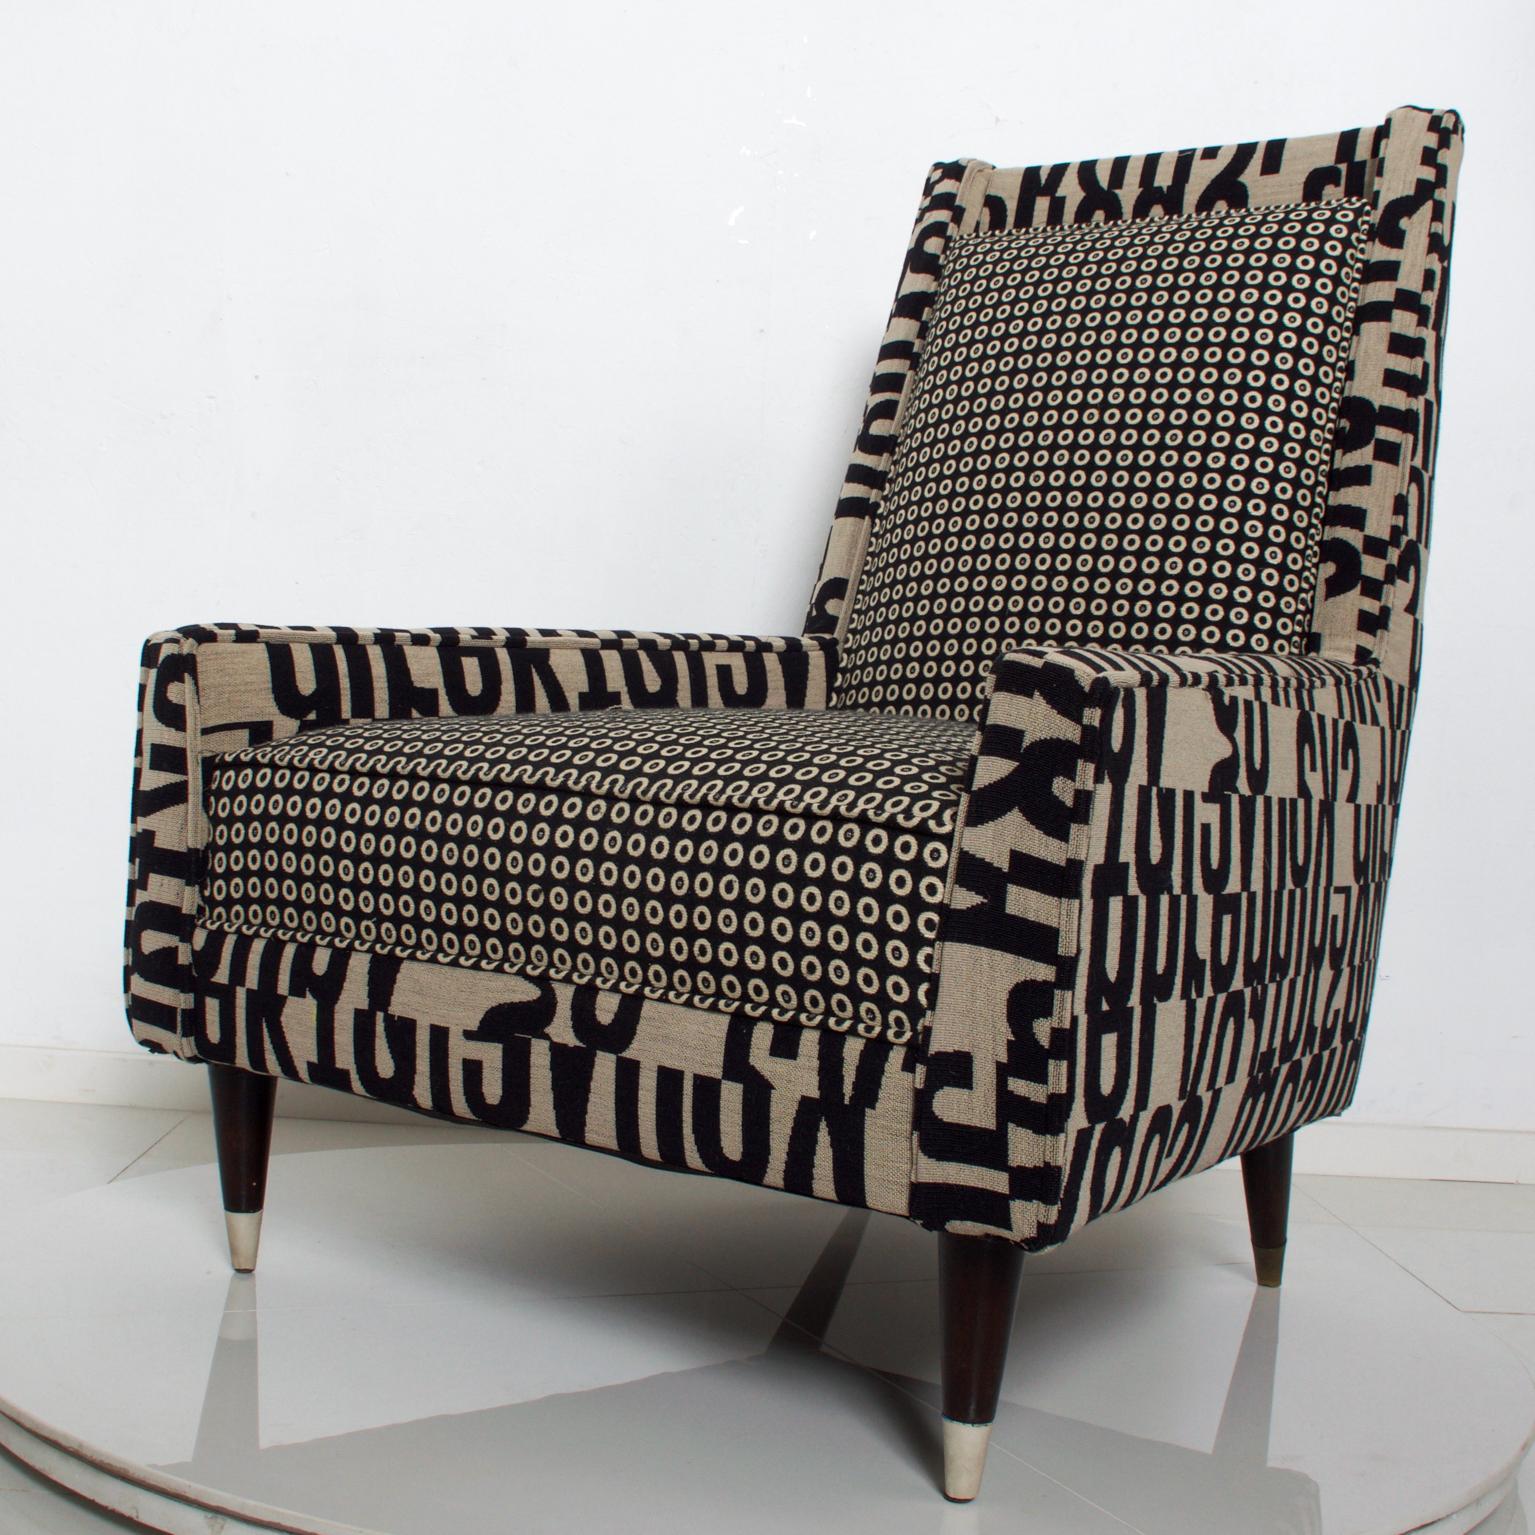 Mexican Gio Ponti Style by Arturo Pani Wild Wingback Lounge Chairs Midcentury Pair 1969